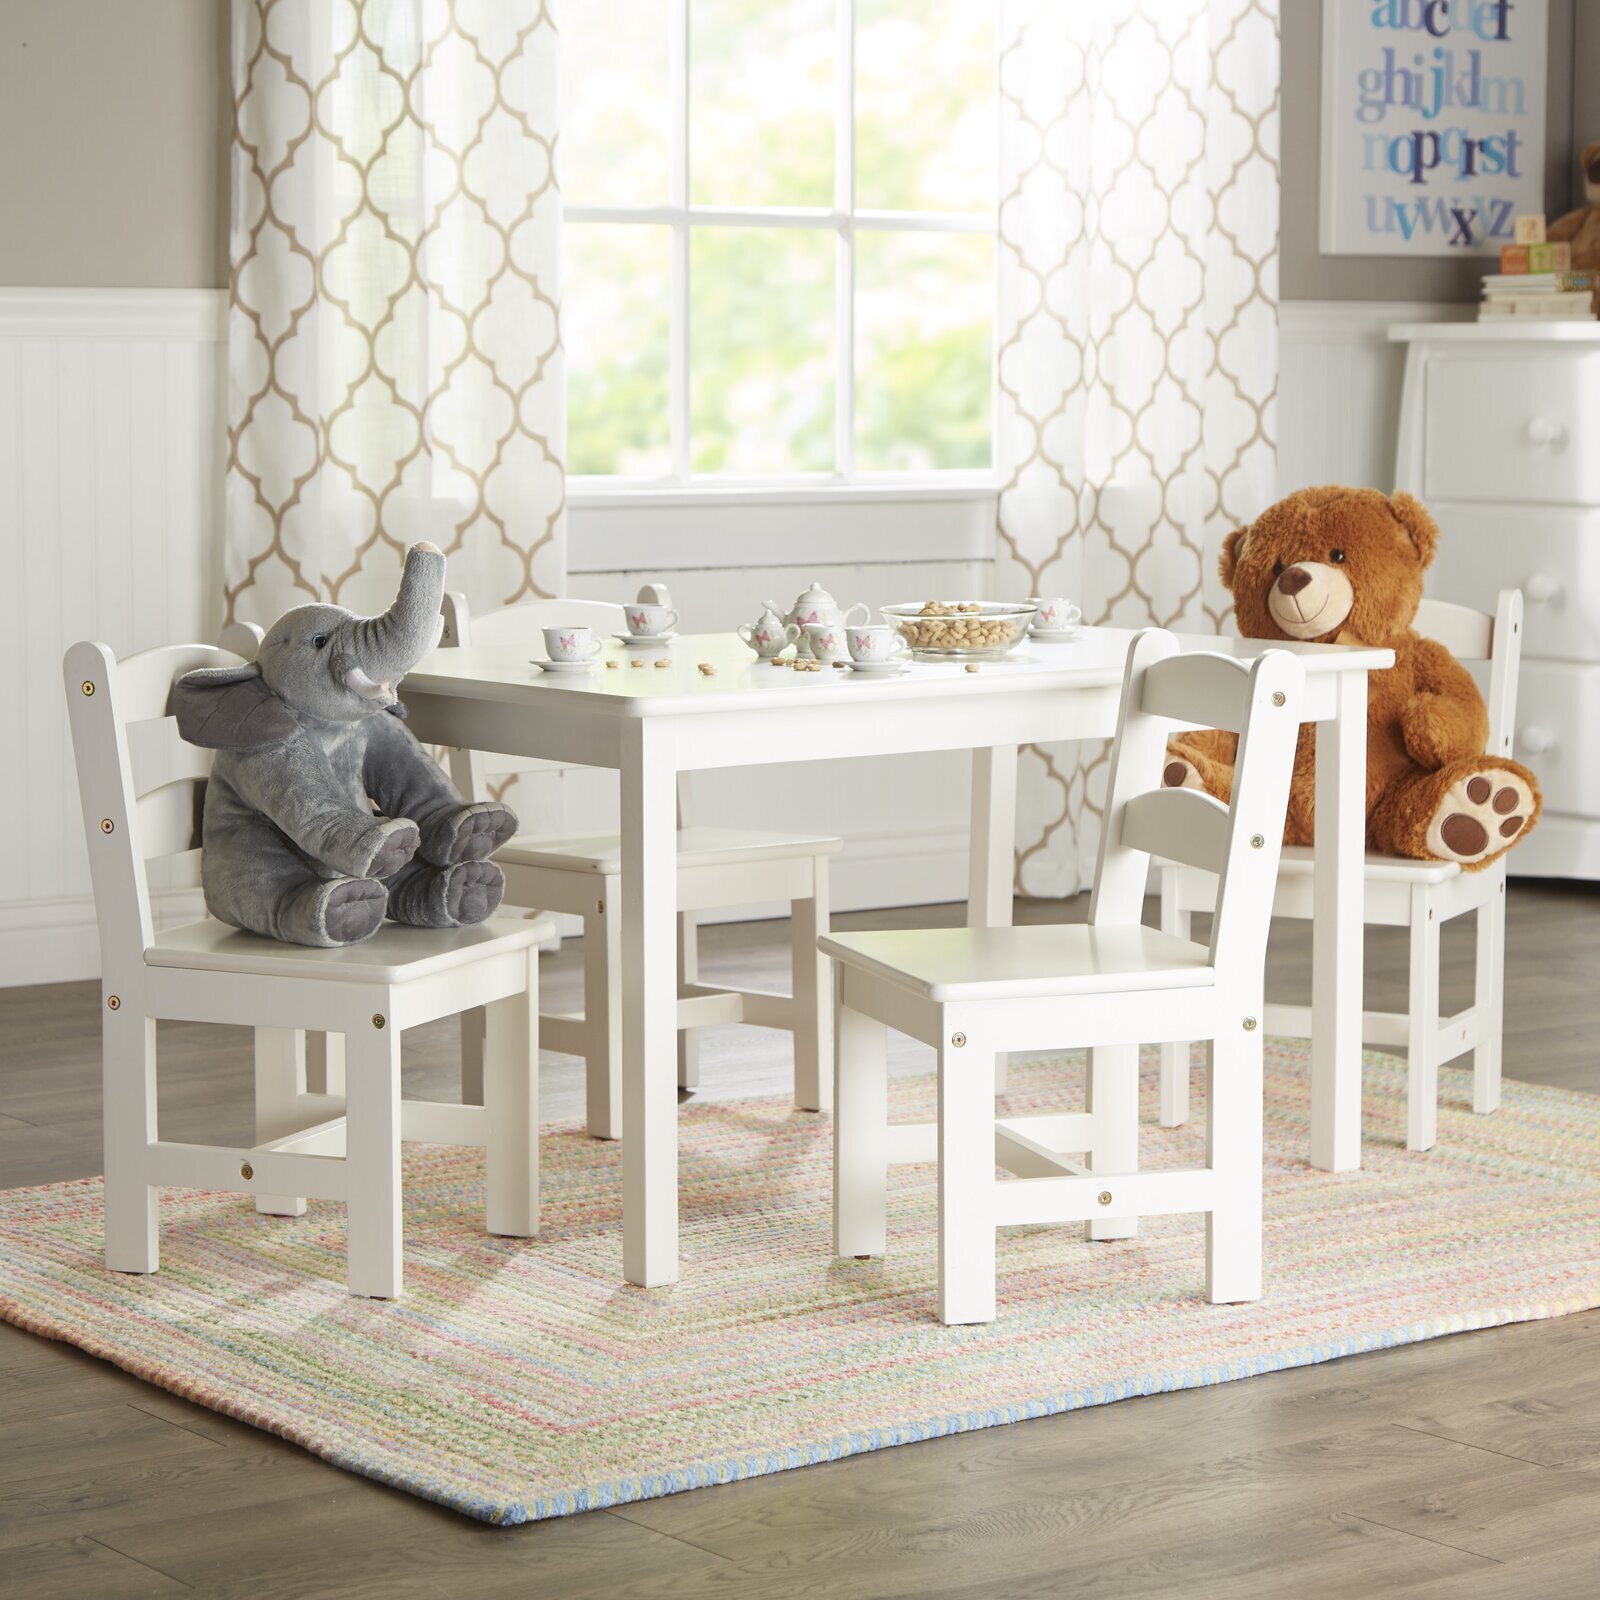 Rectangular Kids Table and Chair Set 